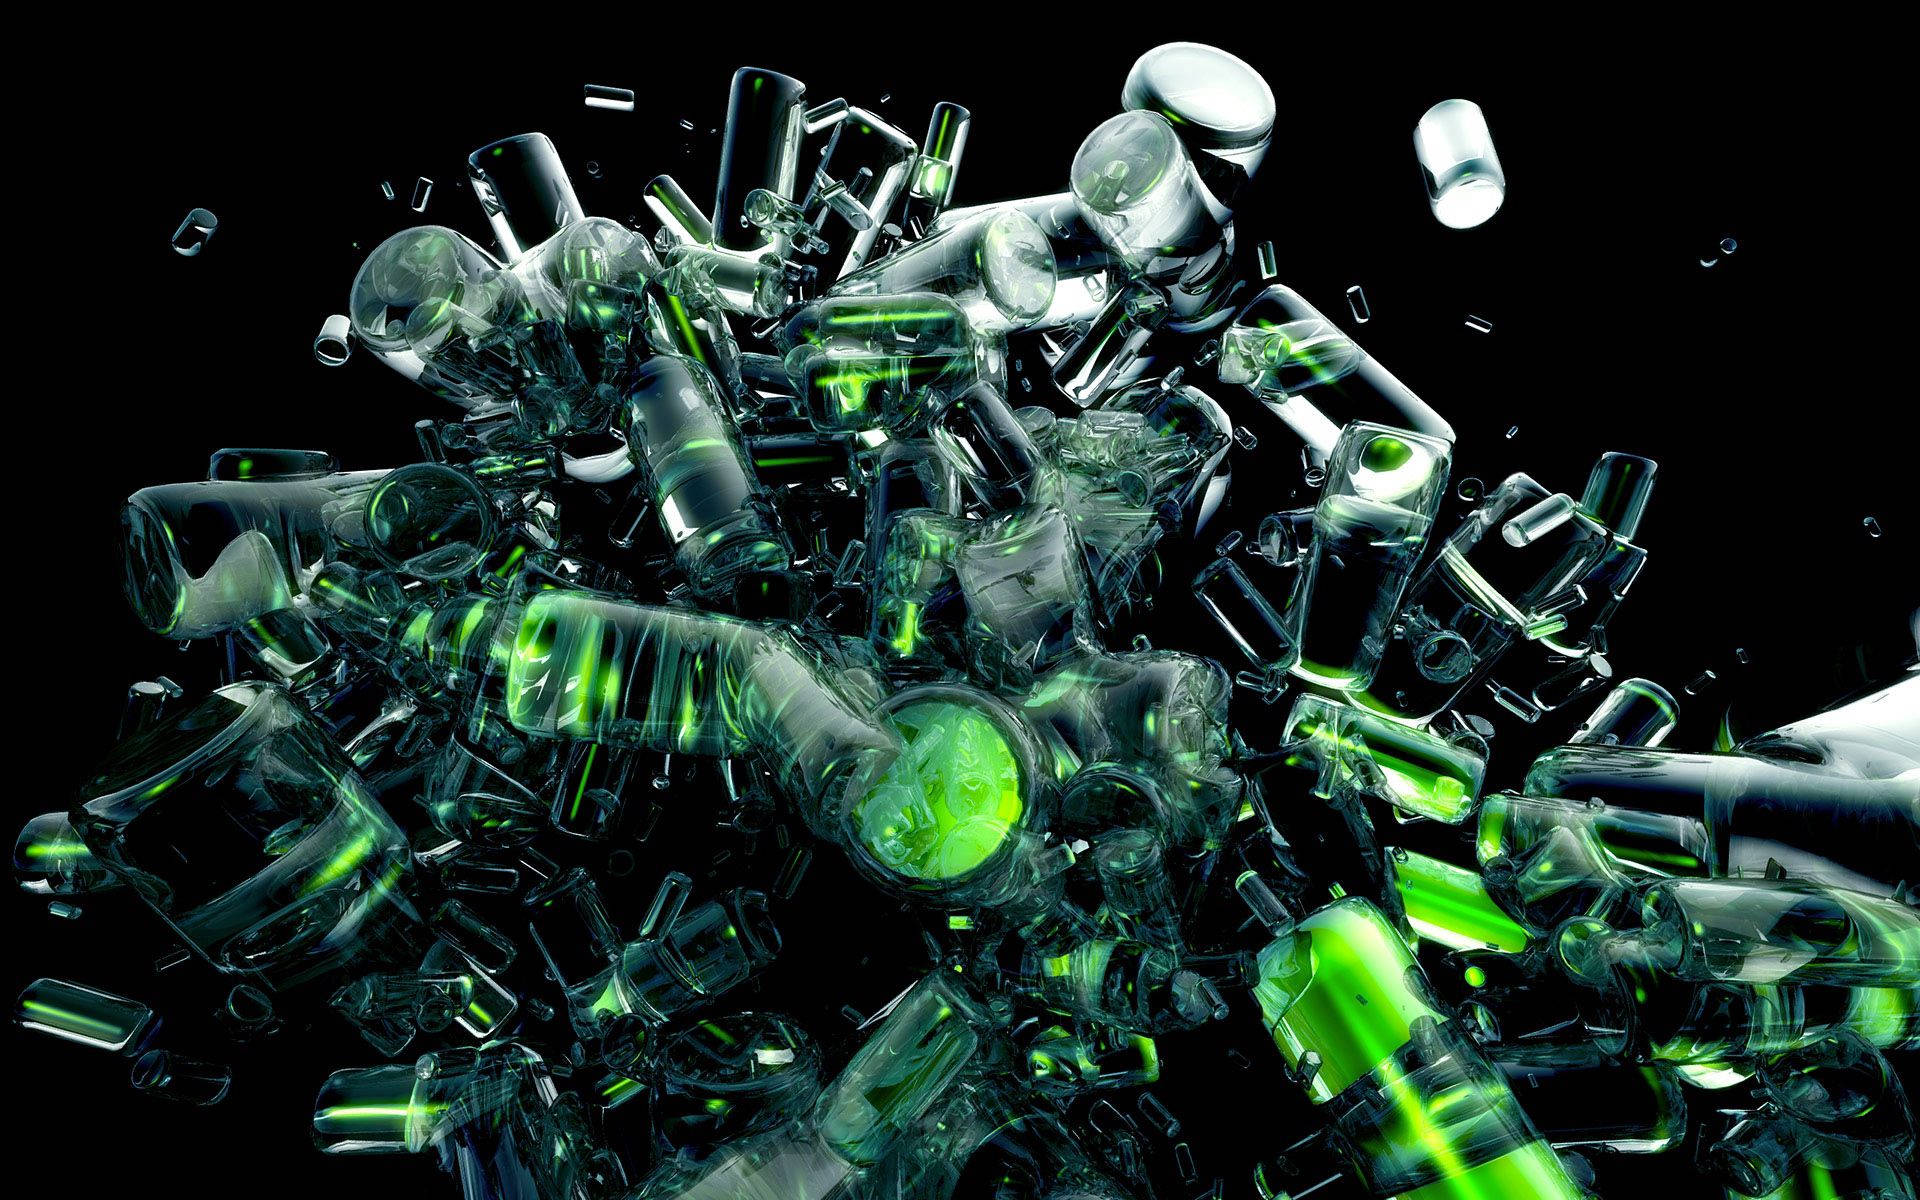 Dynamic Green Bottles Explosion Background